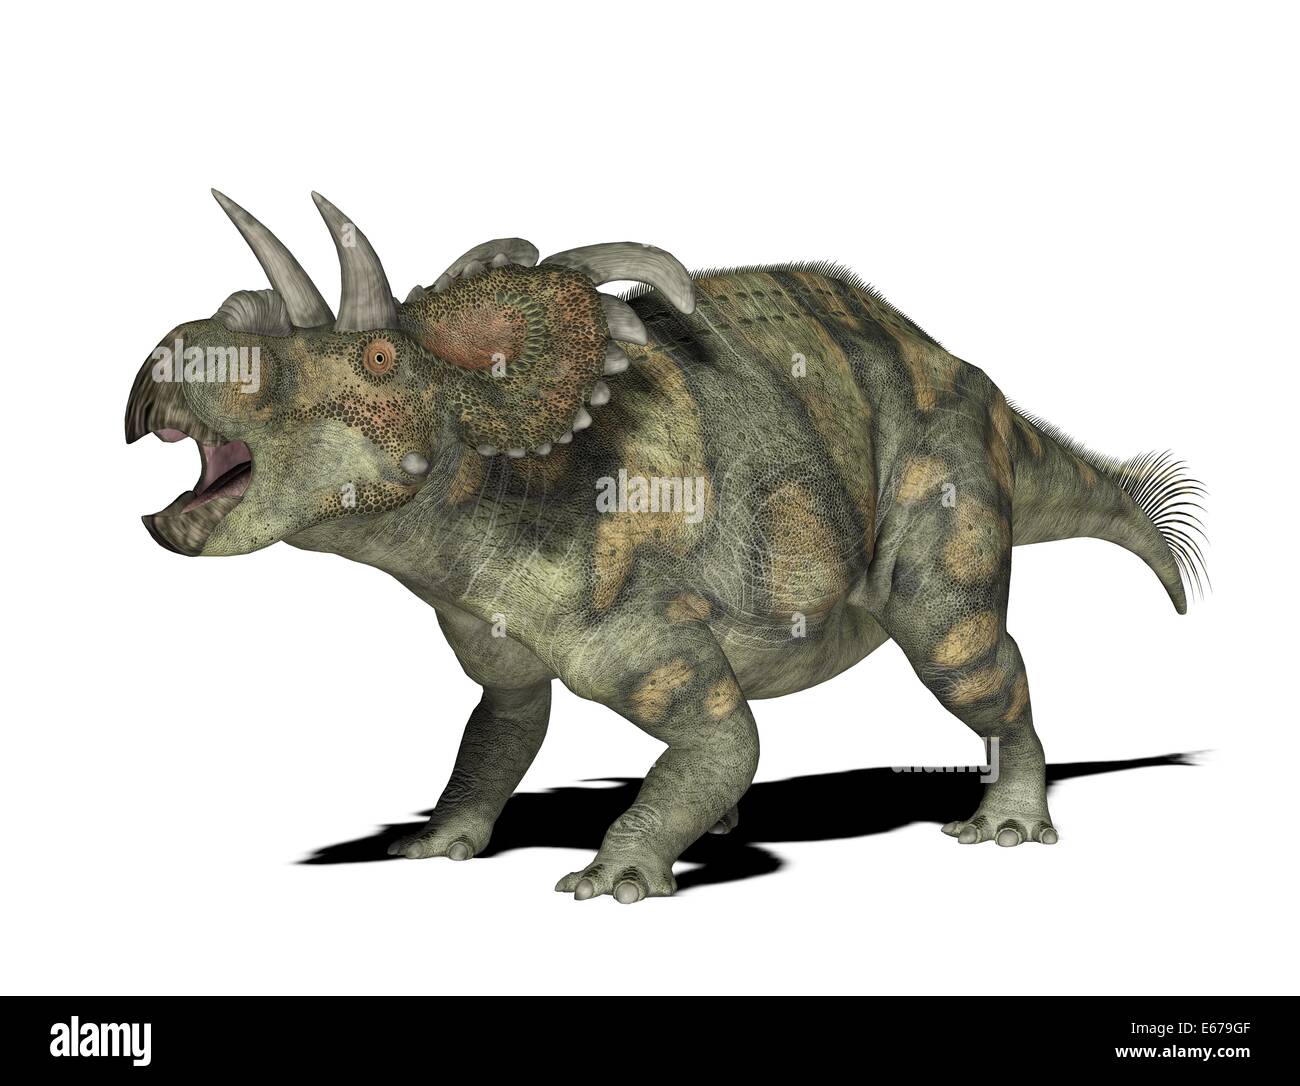 Dinosaurier Albertaceratops / dinosaur Albertaceratops Stock Photo